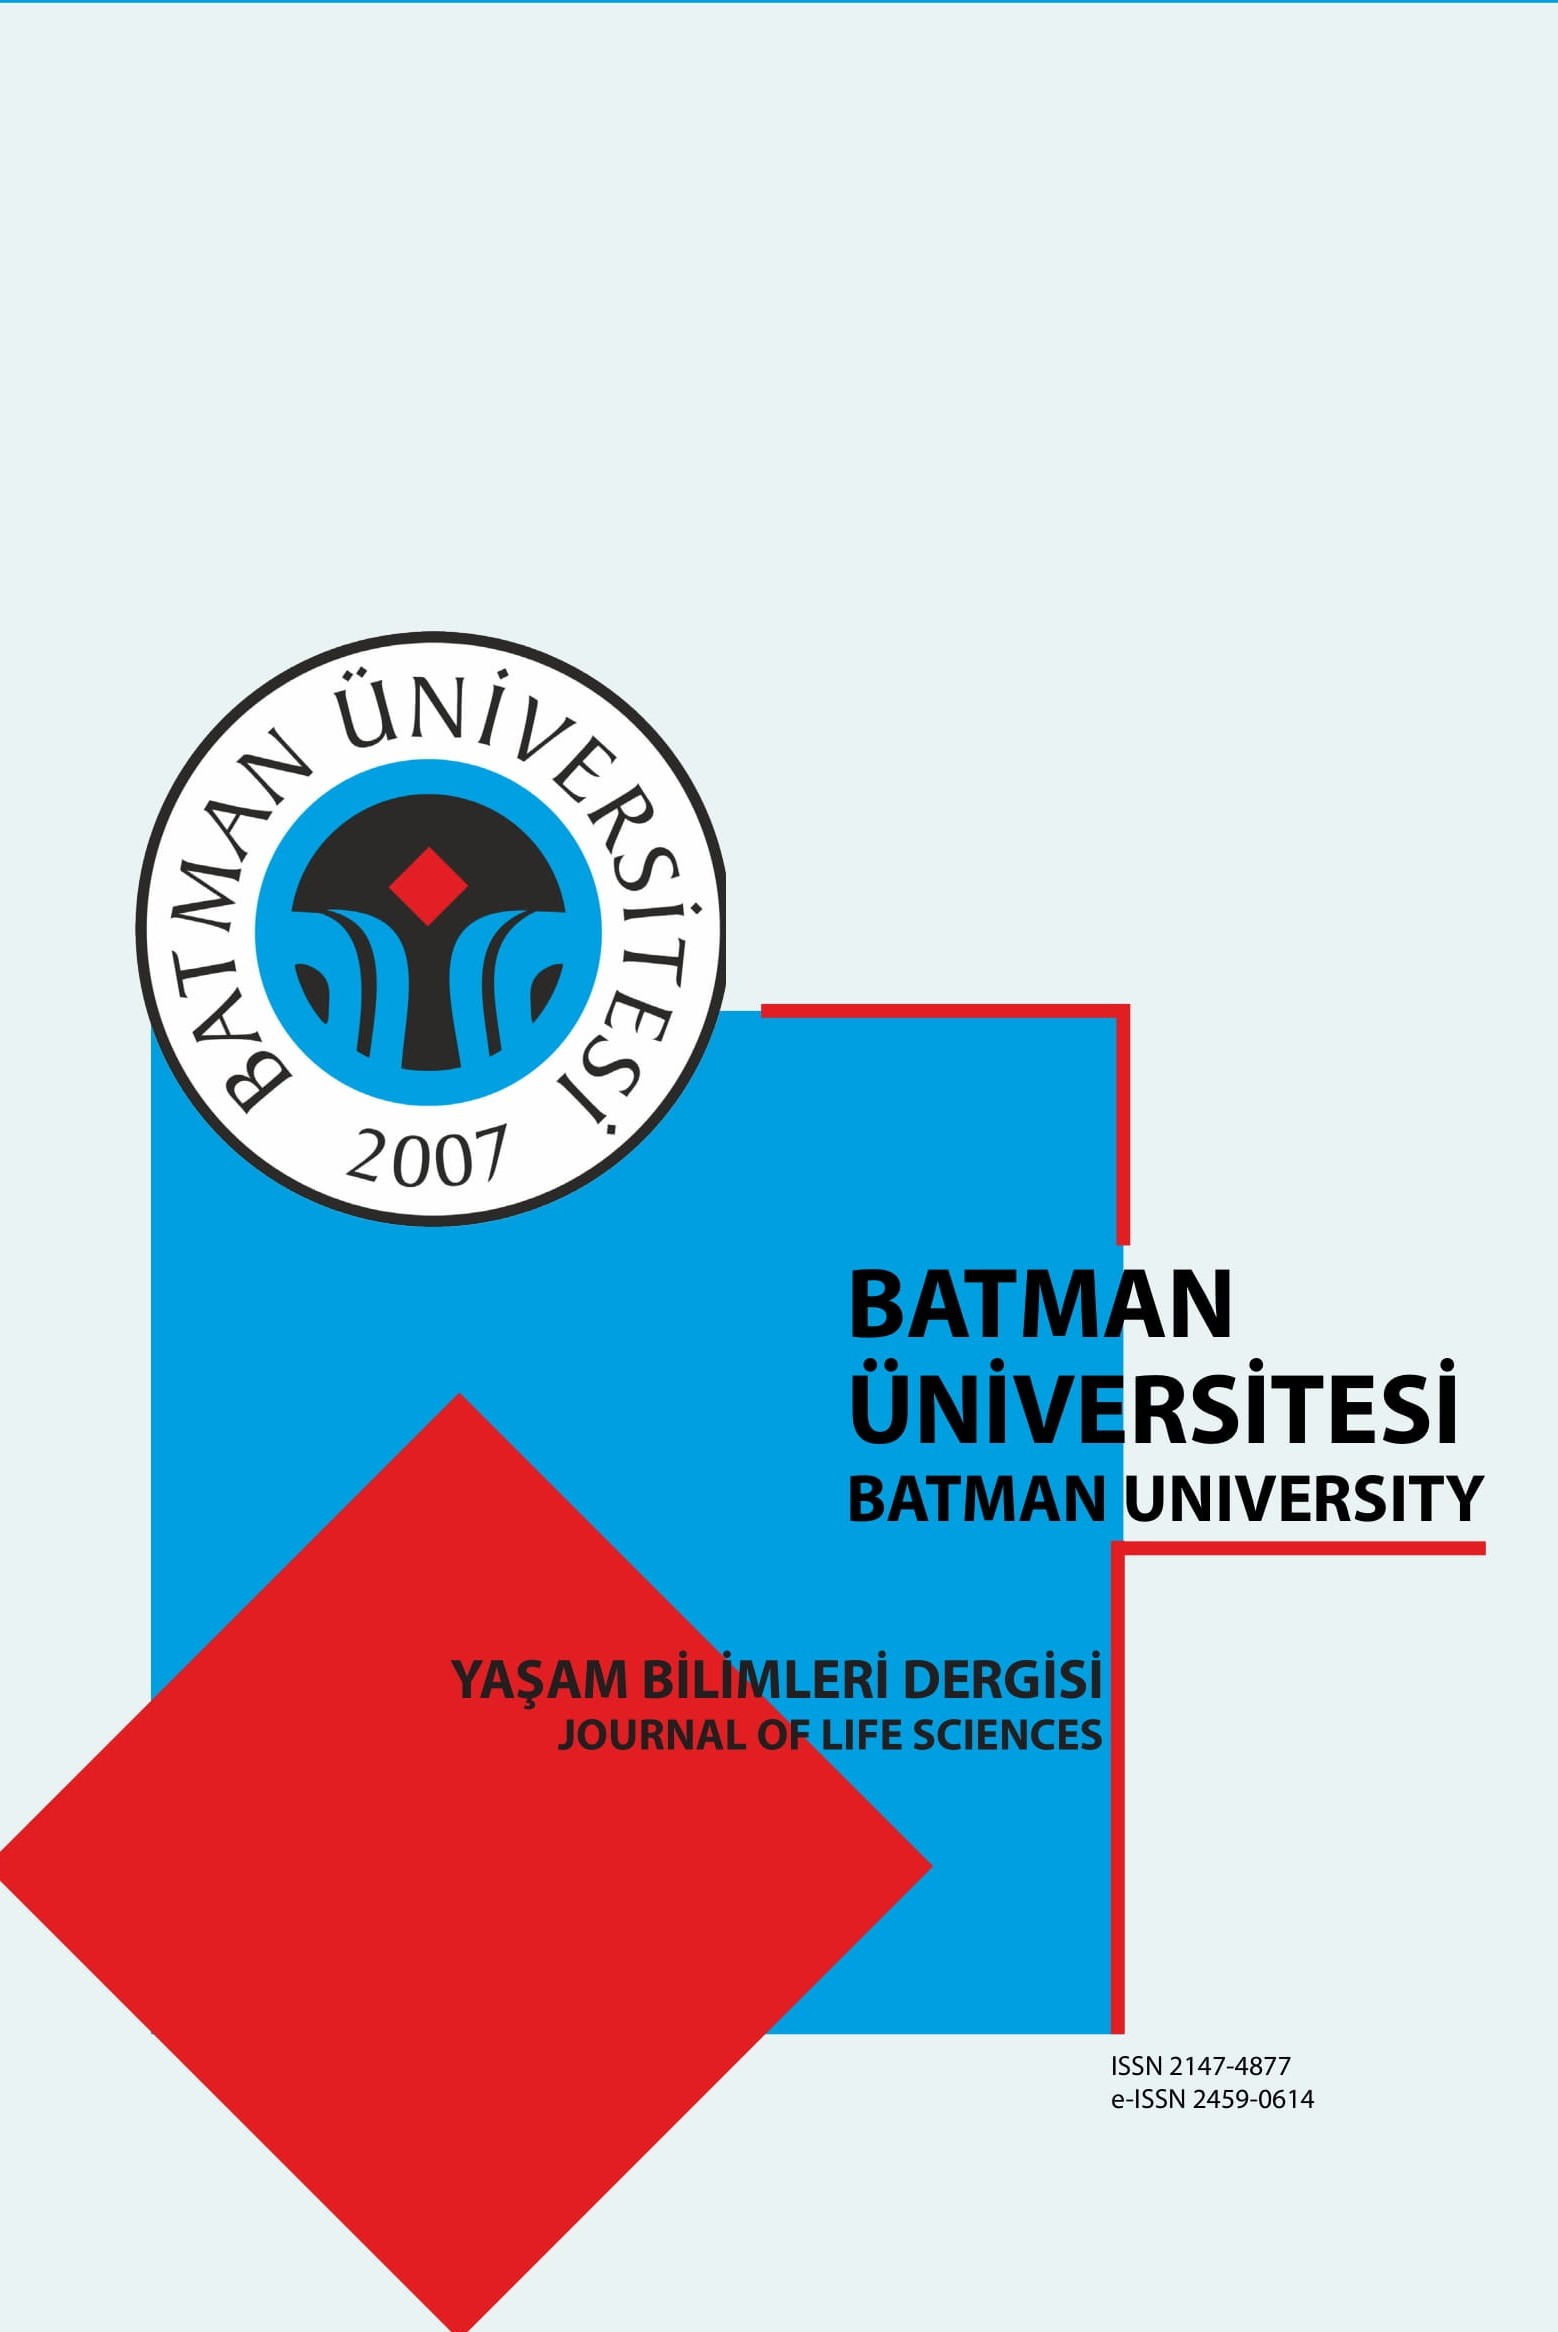 Batman University Journal of Life Sciences